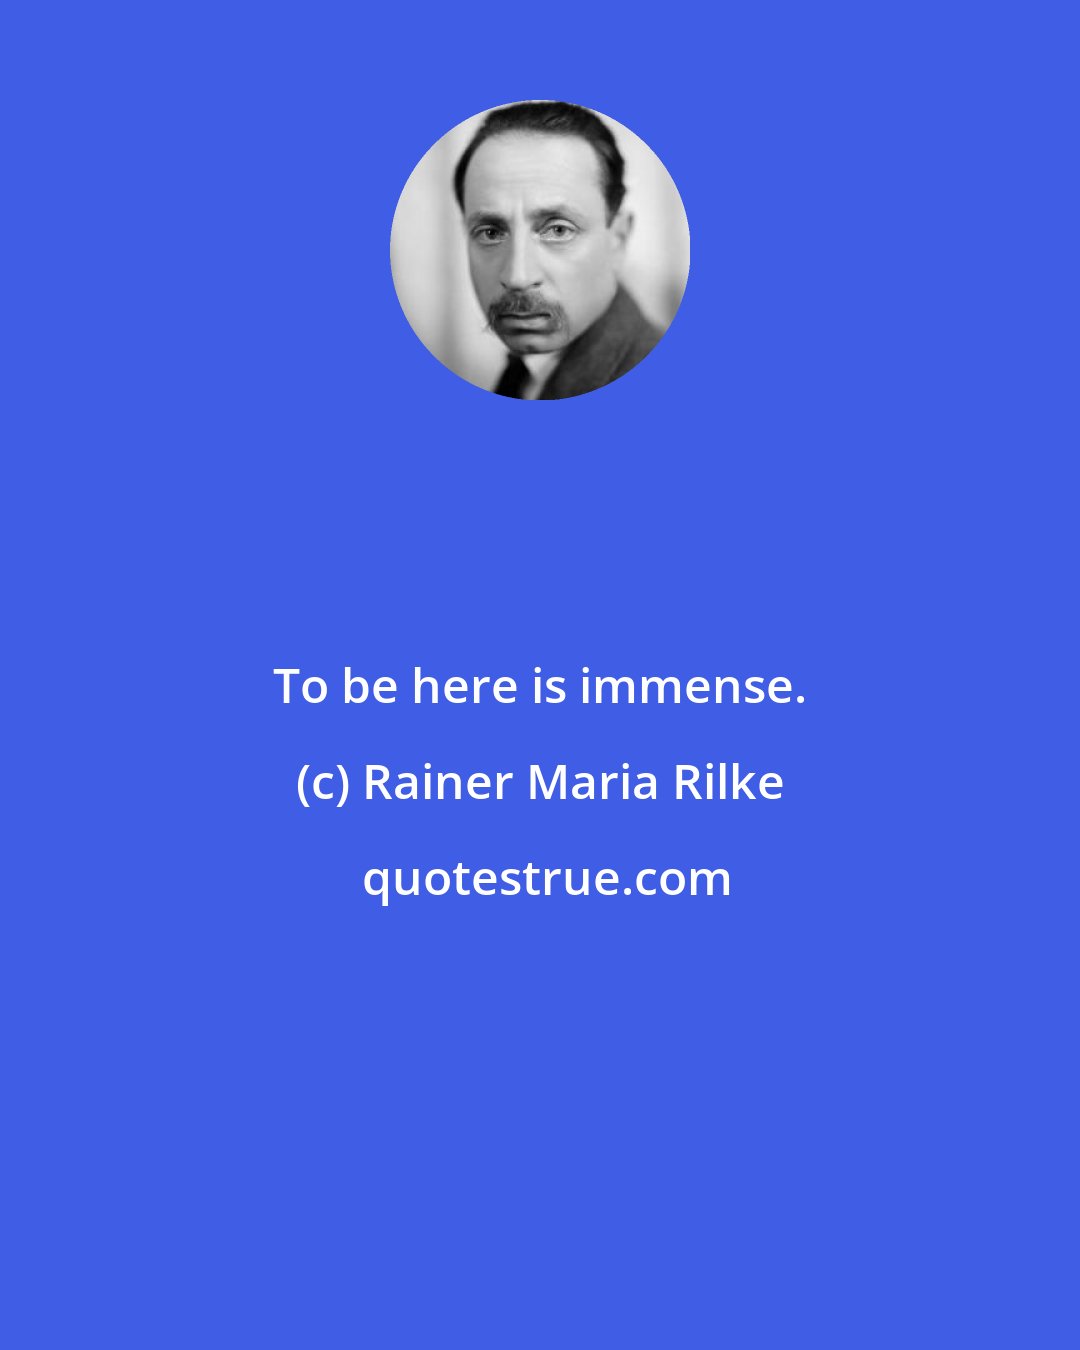 Rainer Maria Rilke: To be here is immense.